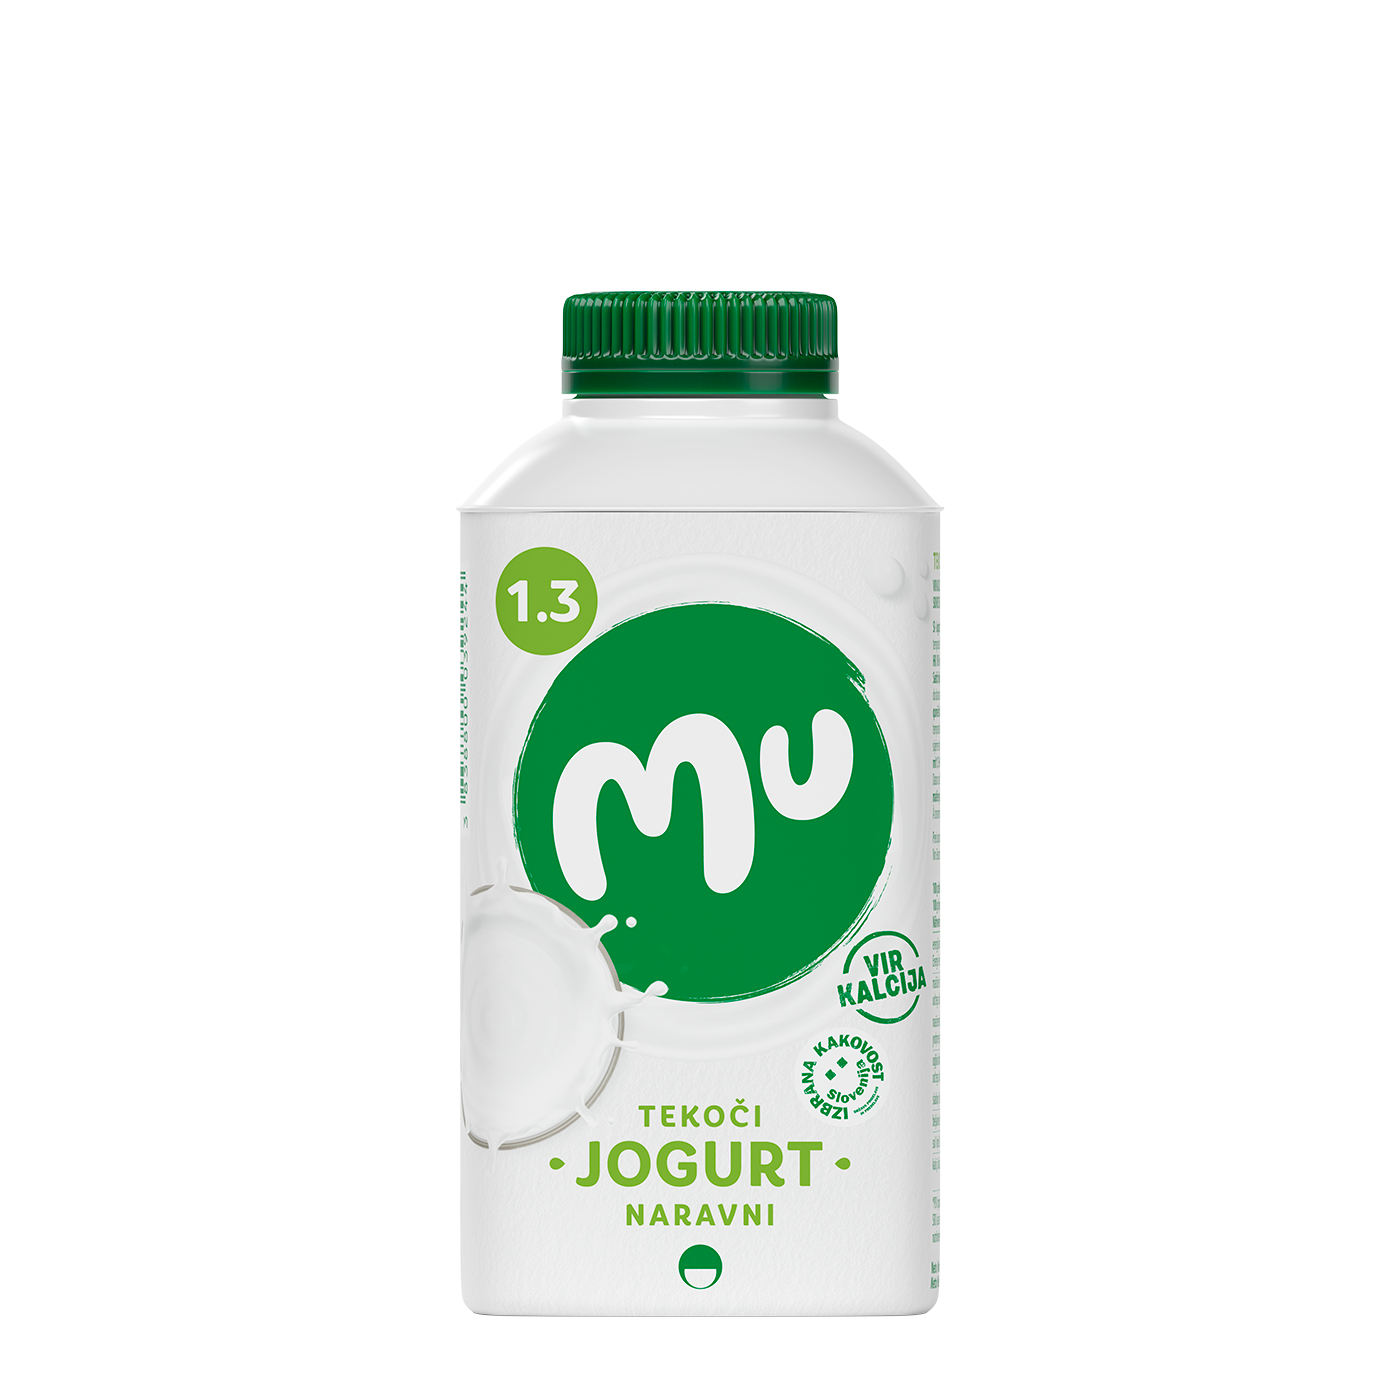 Mu natural drinking yoghurt with 1,3 % milk fat; TT